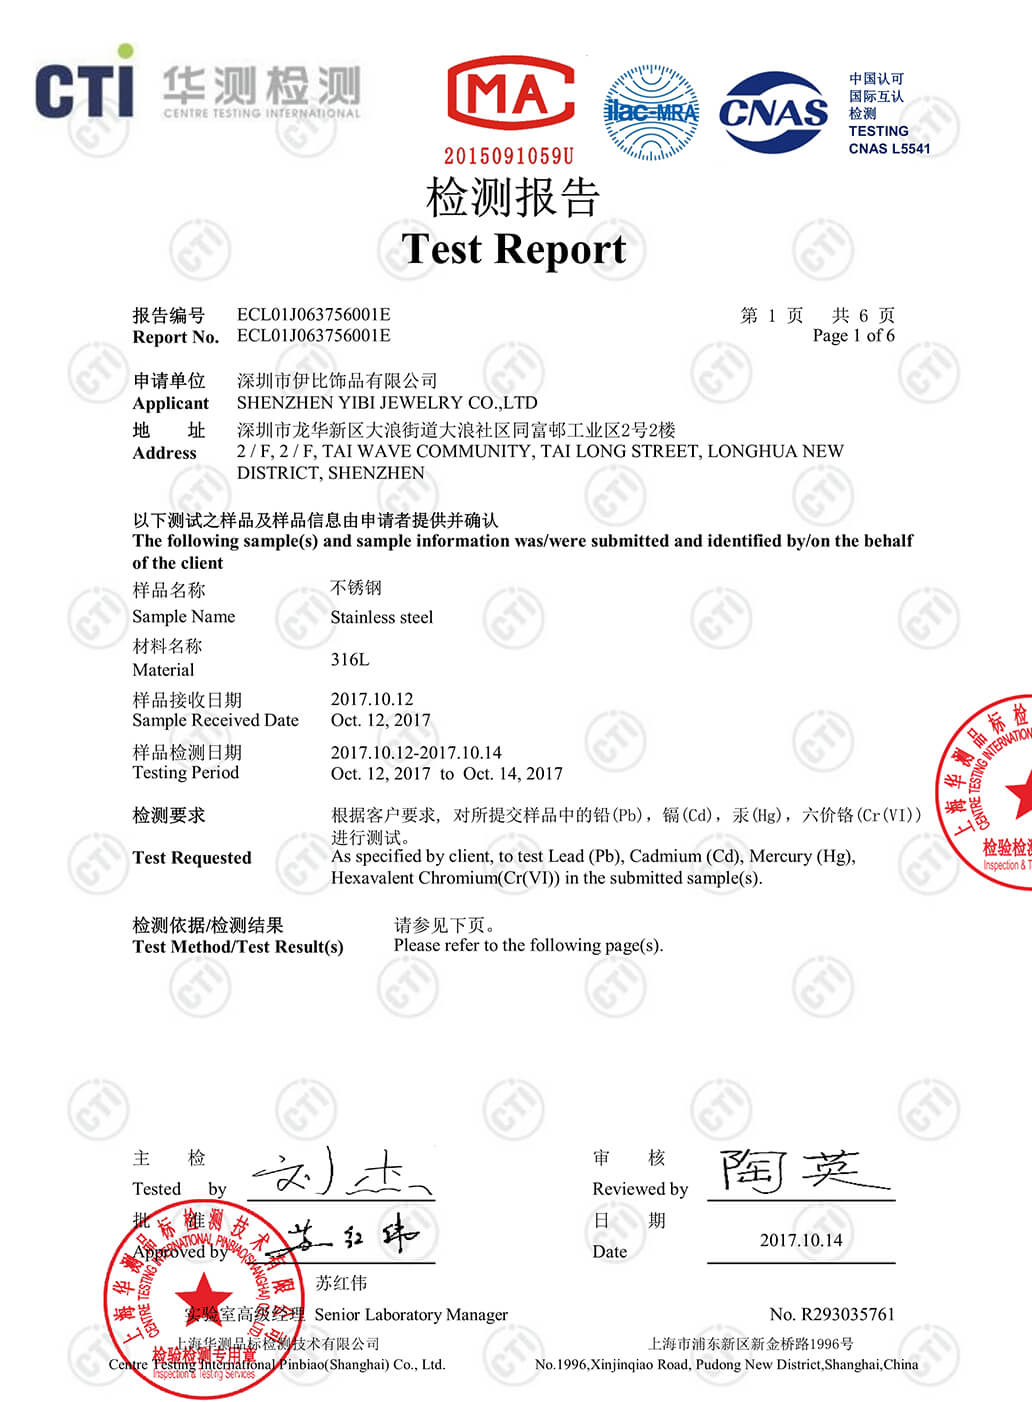 YIBI Jewelry Stainless Steel CTI Certification